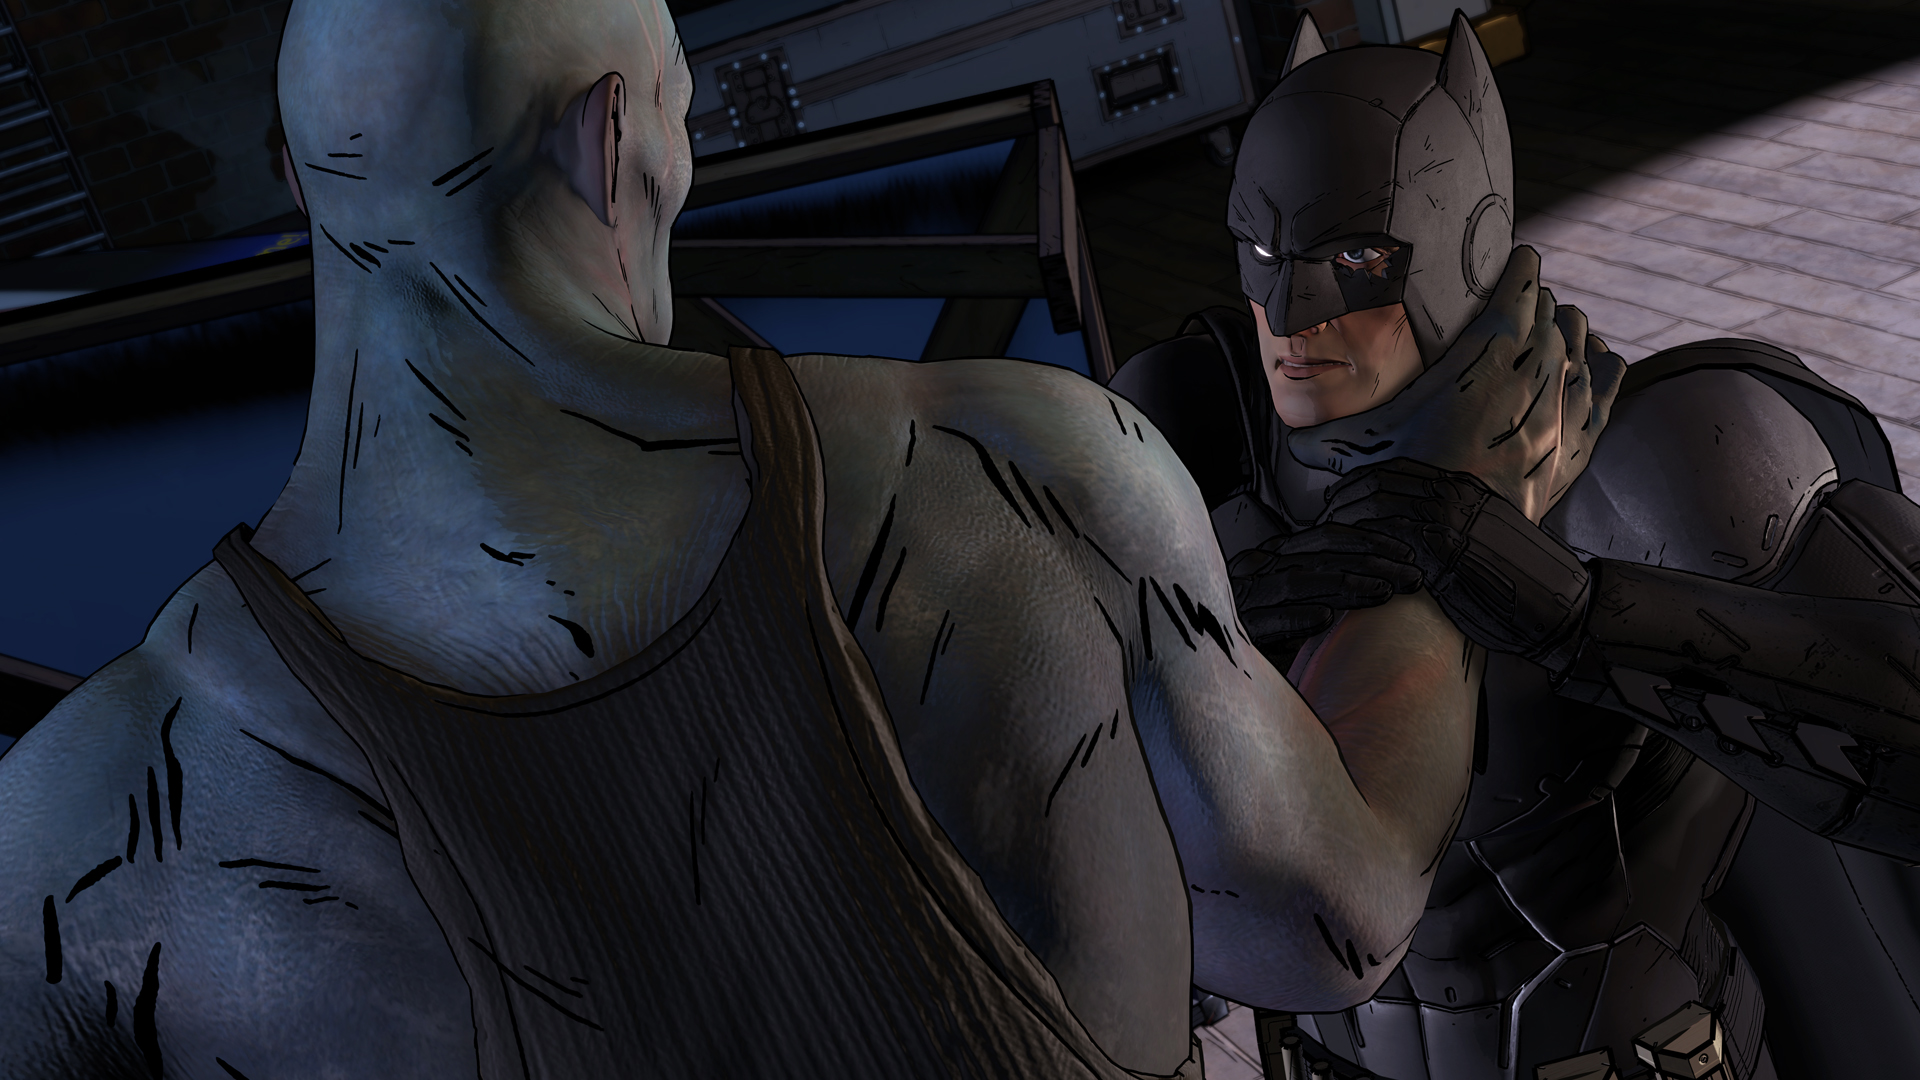 Скачать обои бесплатно Видеоигры, Бэтмен, Бэтмен: Серия Telltale картинка на рабочий стол ПК